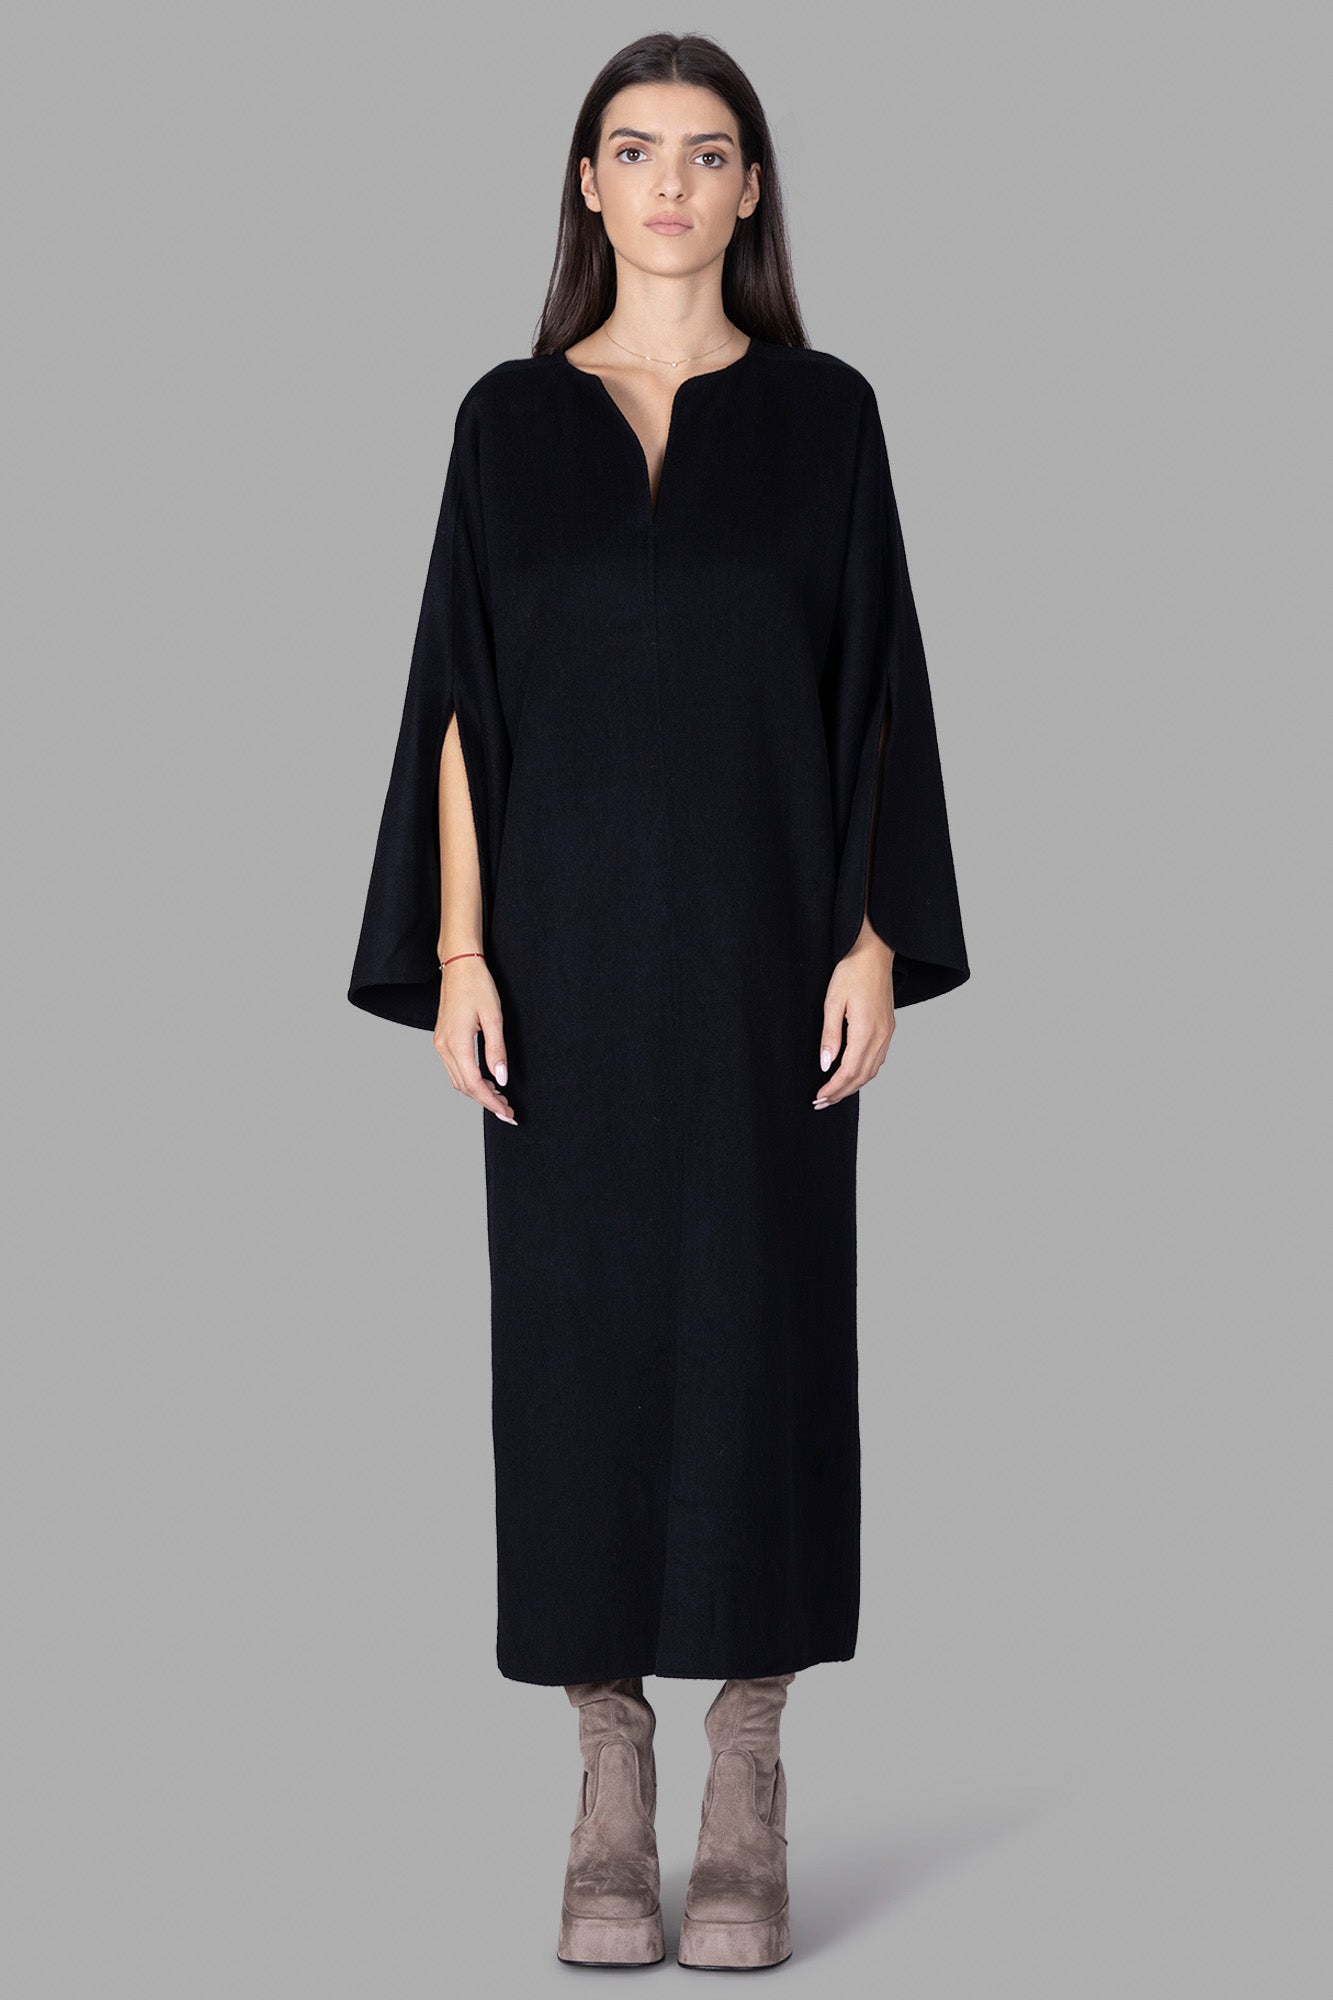 Cais Black Wool Dress